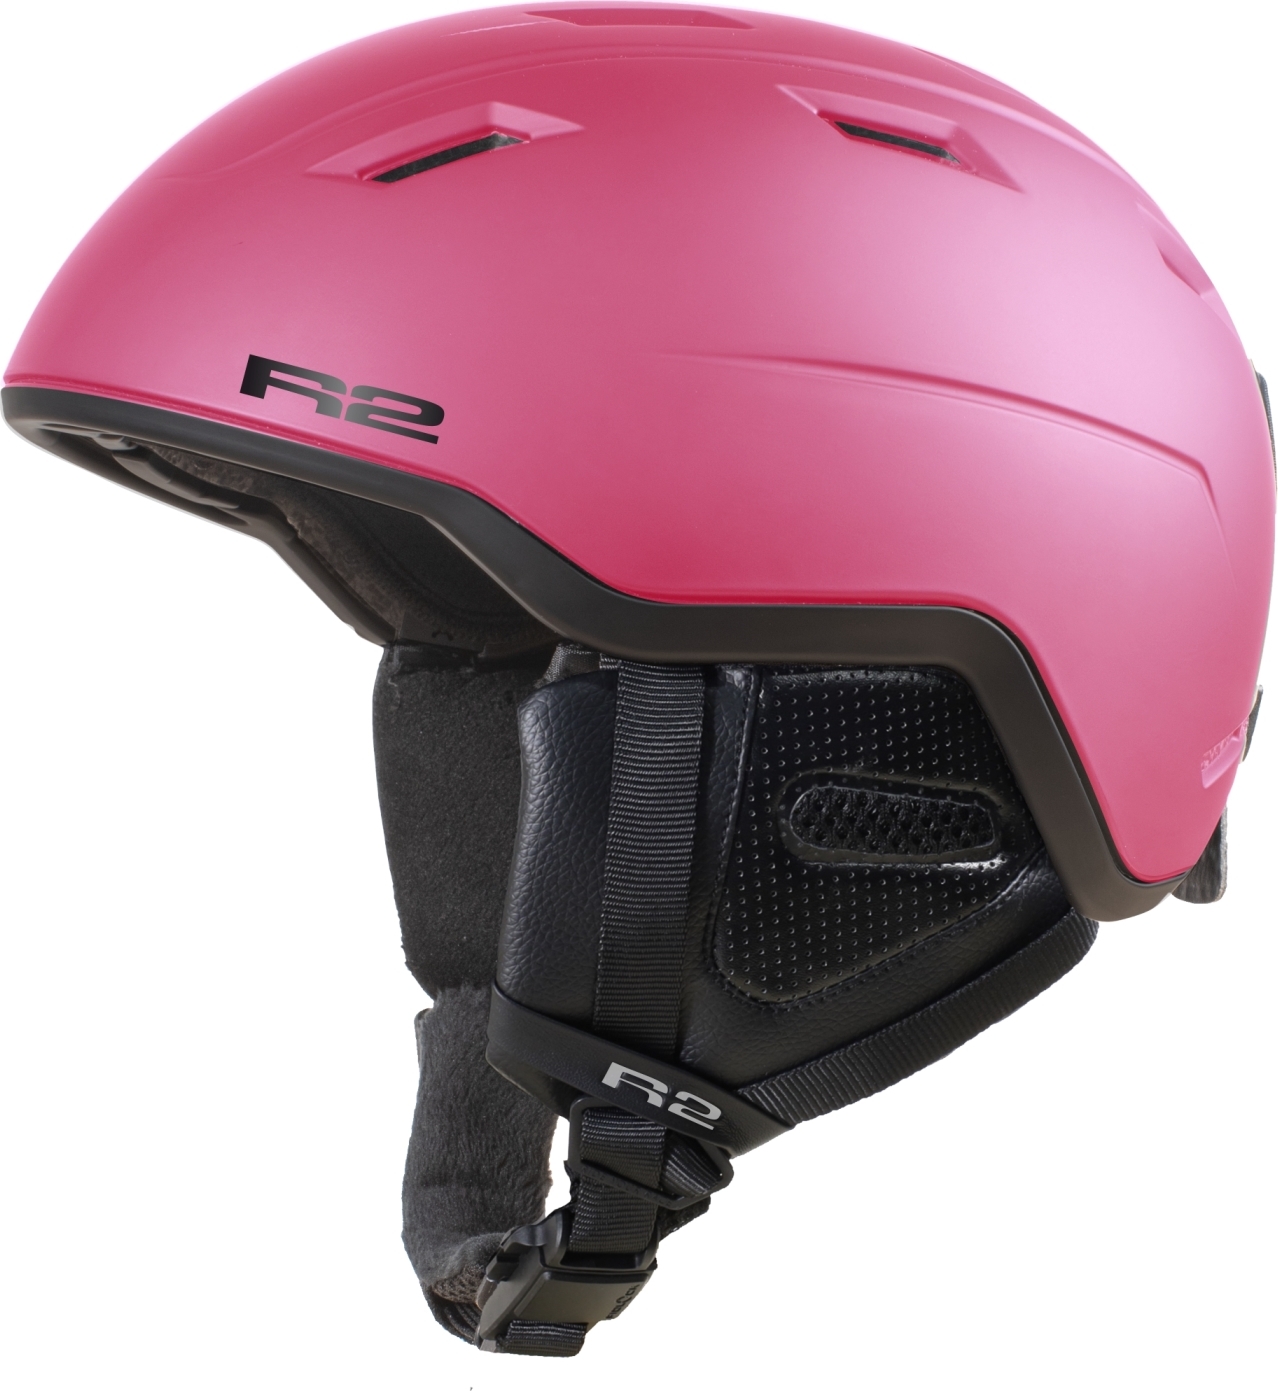 Unisex lyžařská helma R2 Irbis růžová Velikost: S/M